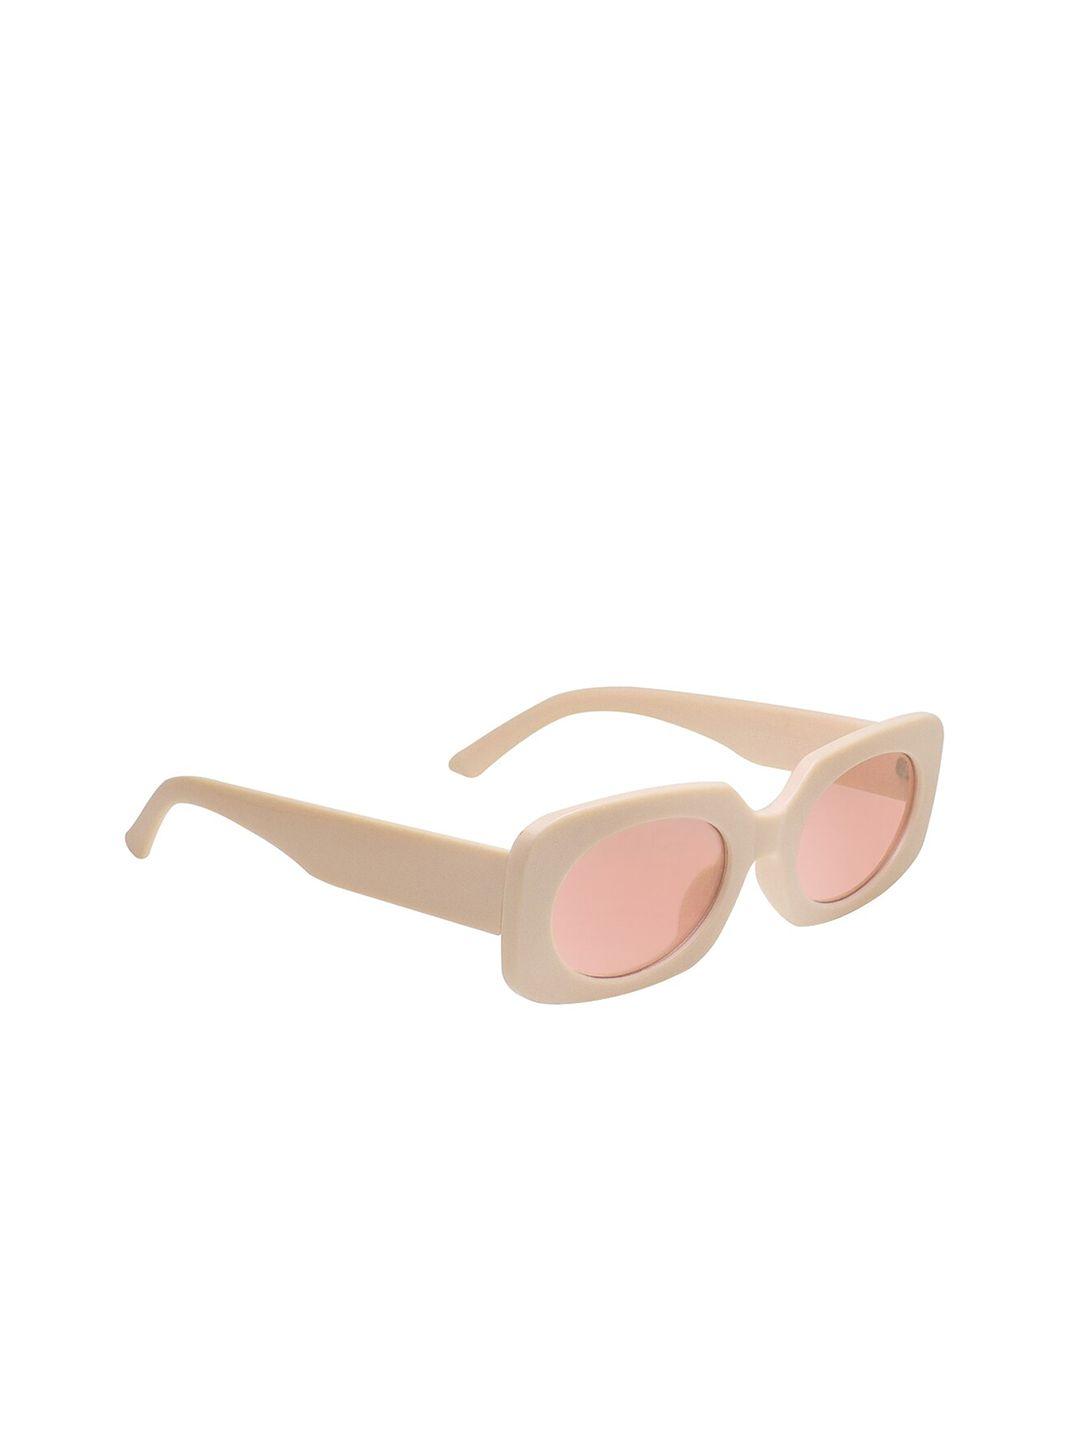 peter jones eyewear unisex pink lens rectangle sunglasses with uv protected lens